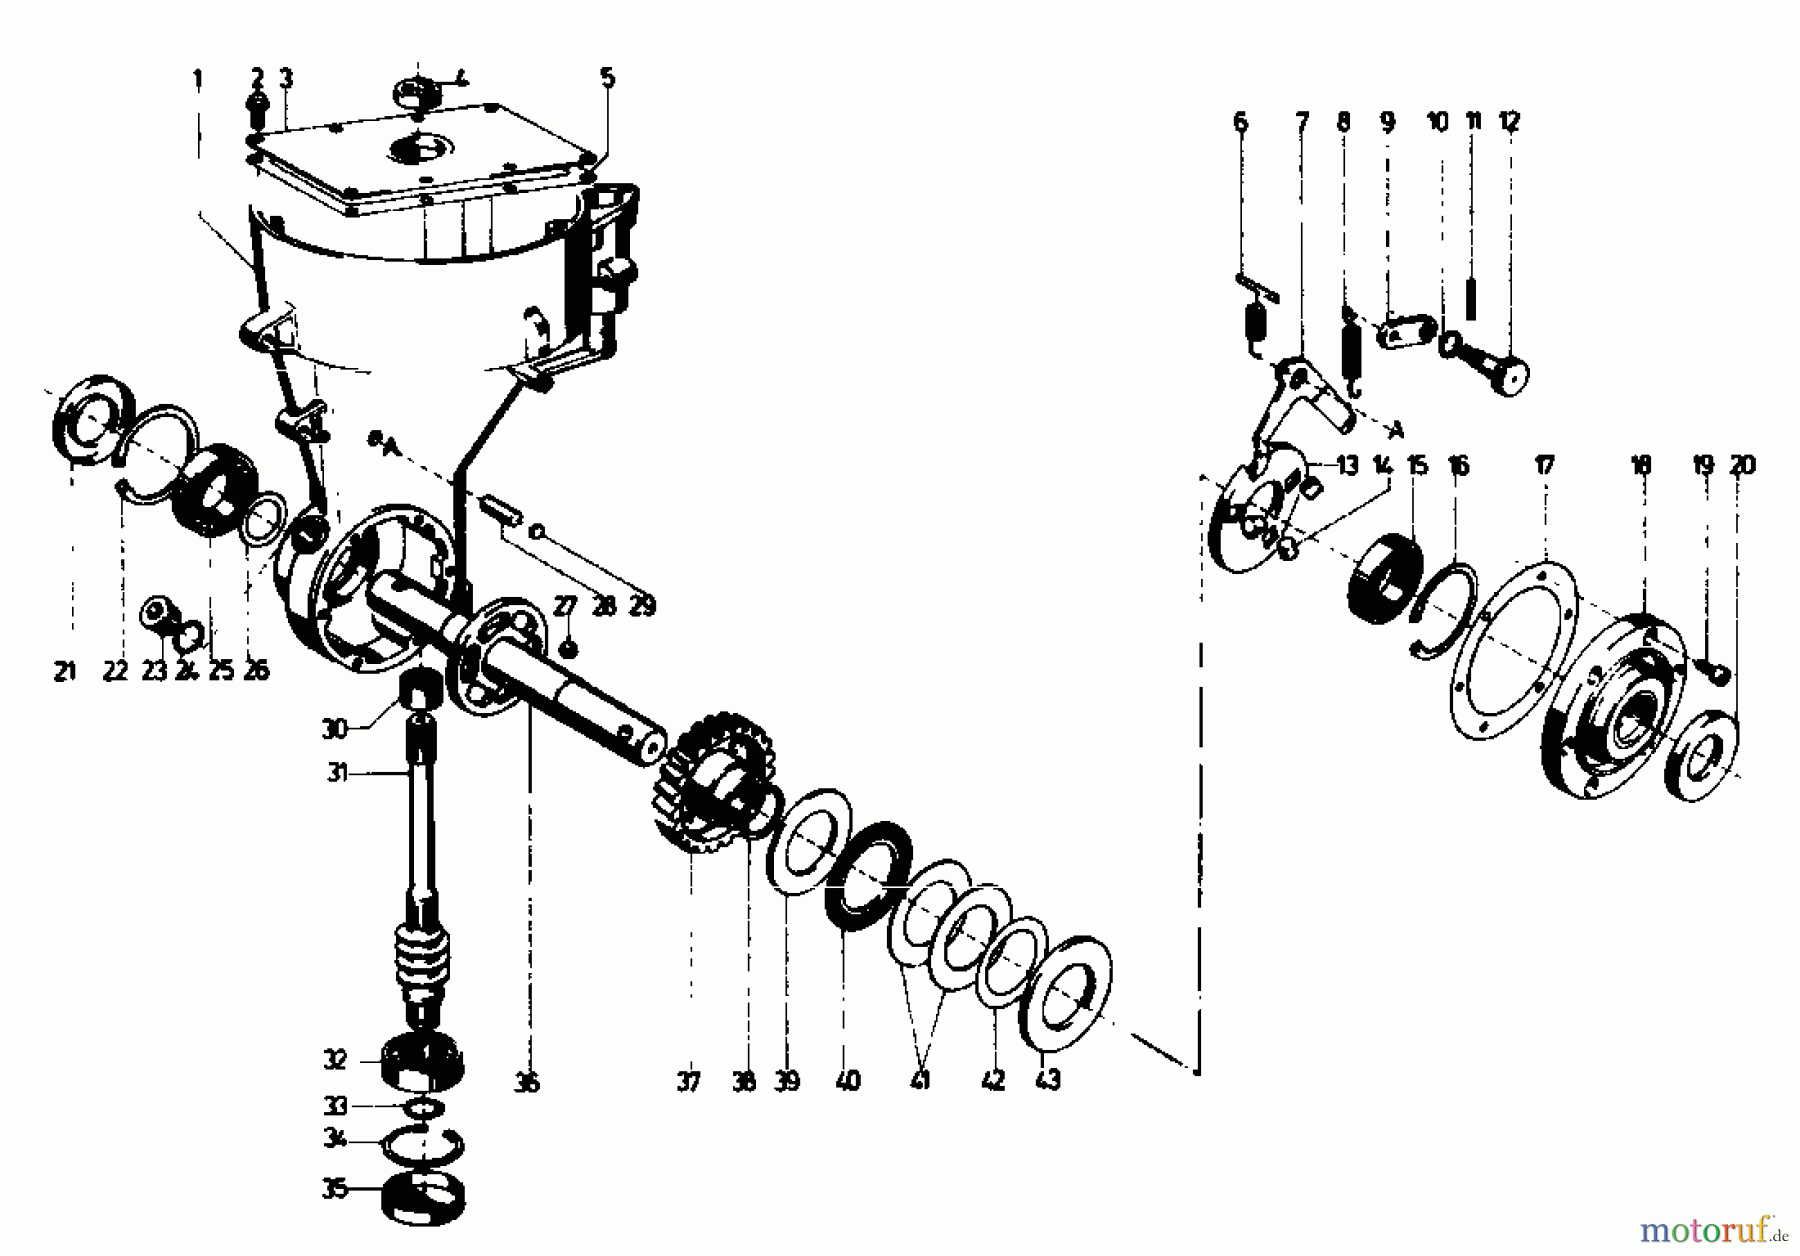  Gutbrod Motorhacken MB 65-35 07516.01  (1988) Getriebe